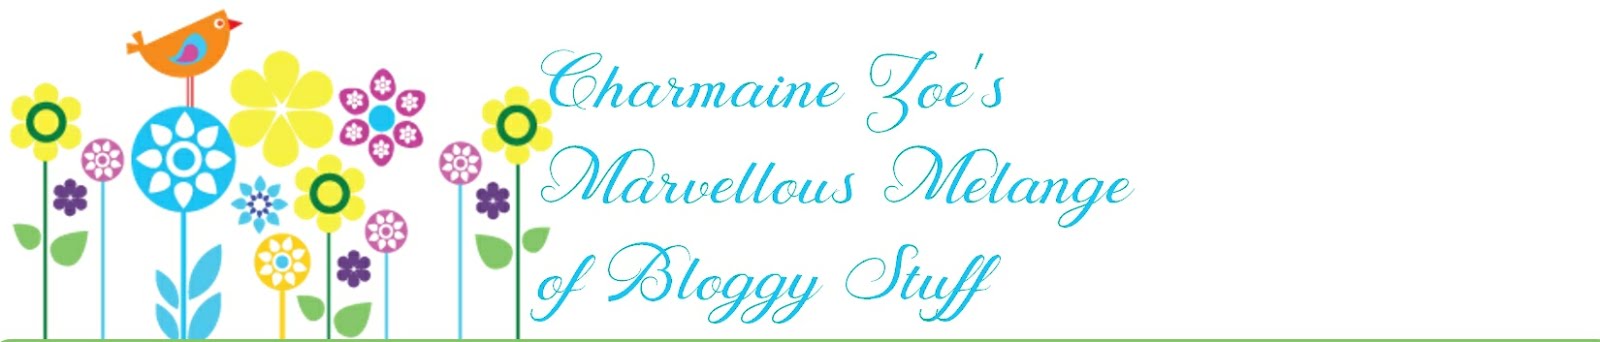 Charmaine Zoe's Marvellous Melange of Bloggy Stuff